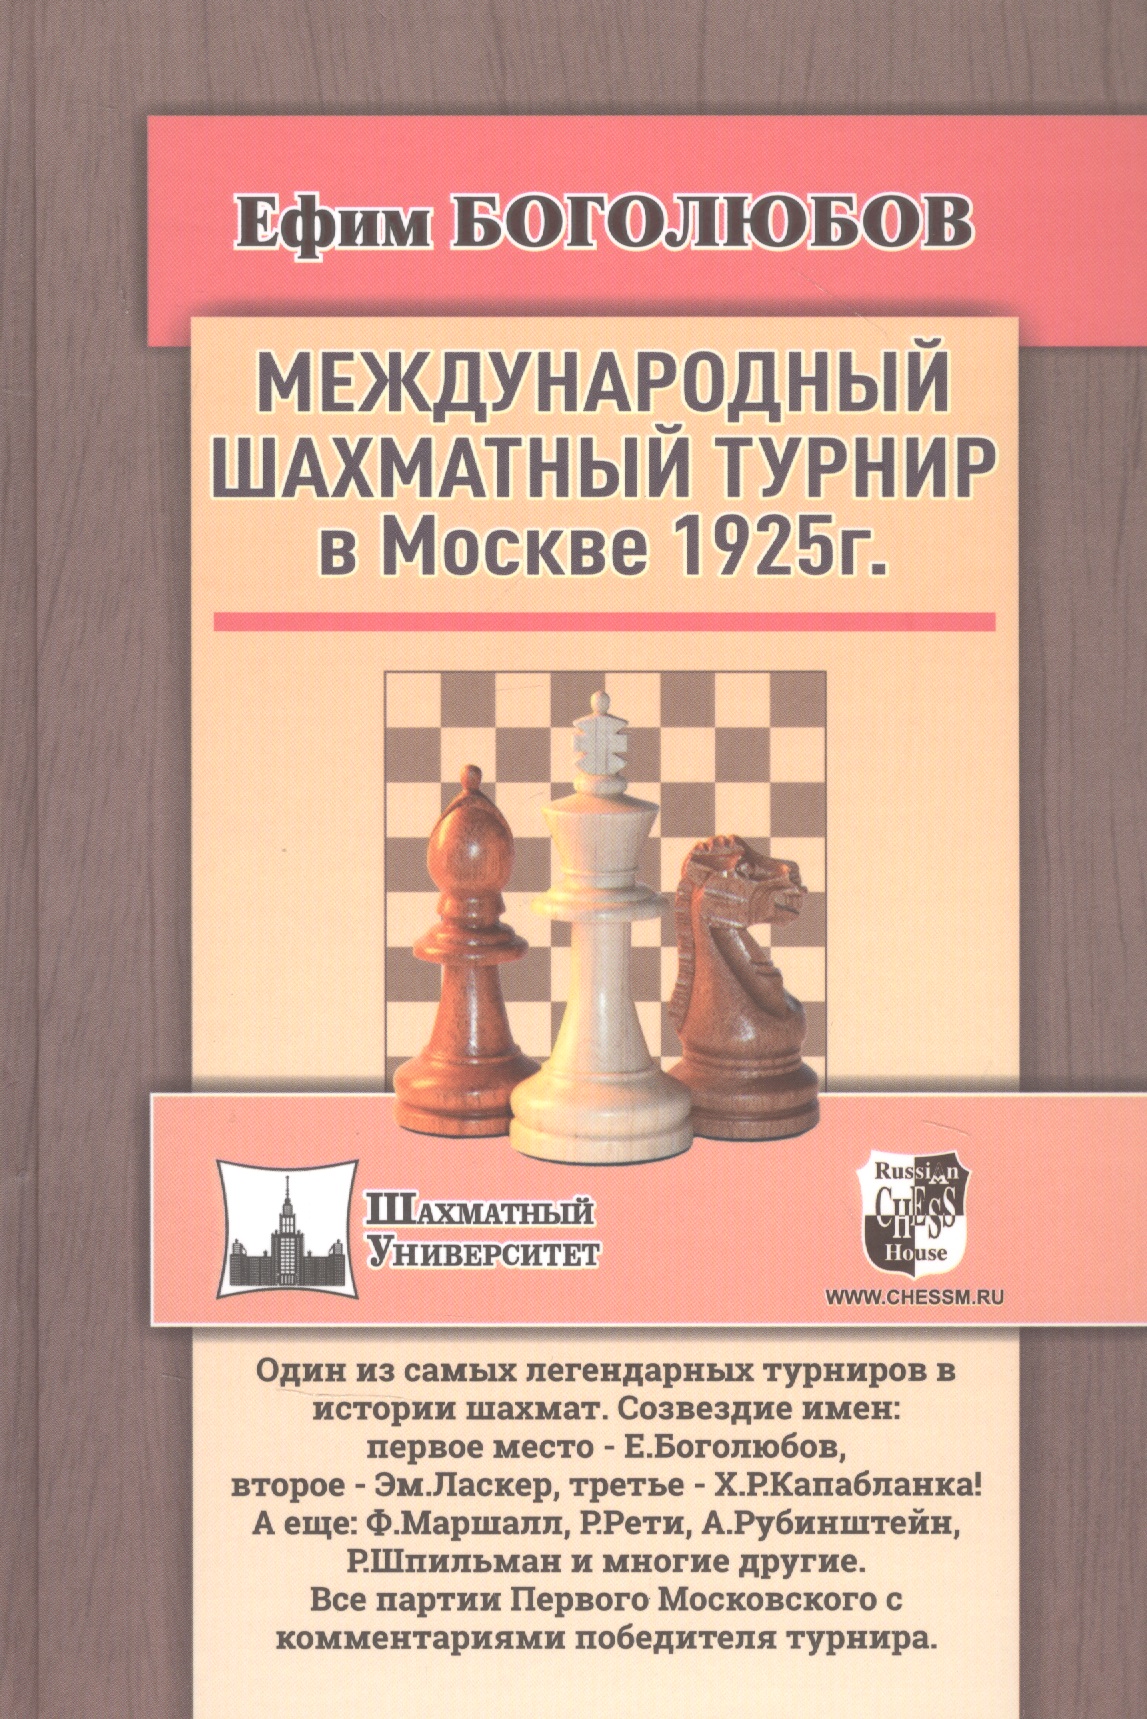 Международный шахматный турнир в Москве 1925 года ласкер эмануил капабланка хосе рауль стейниц вильгельм уроки шахматных маэстро